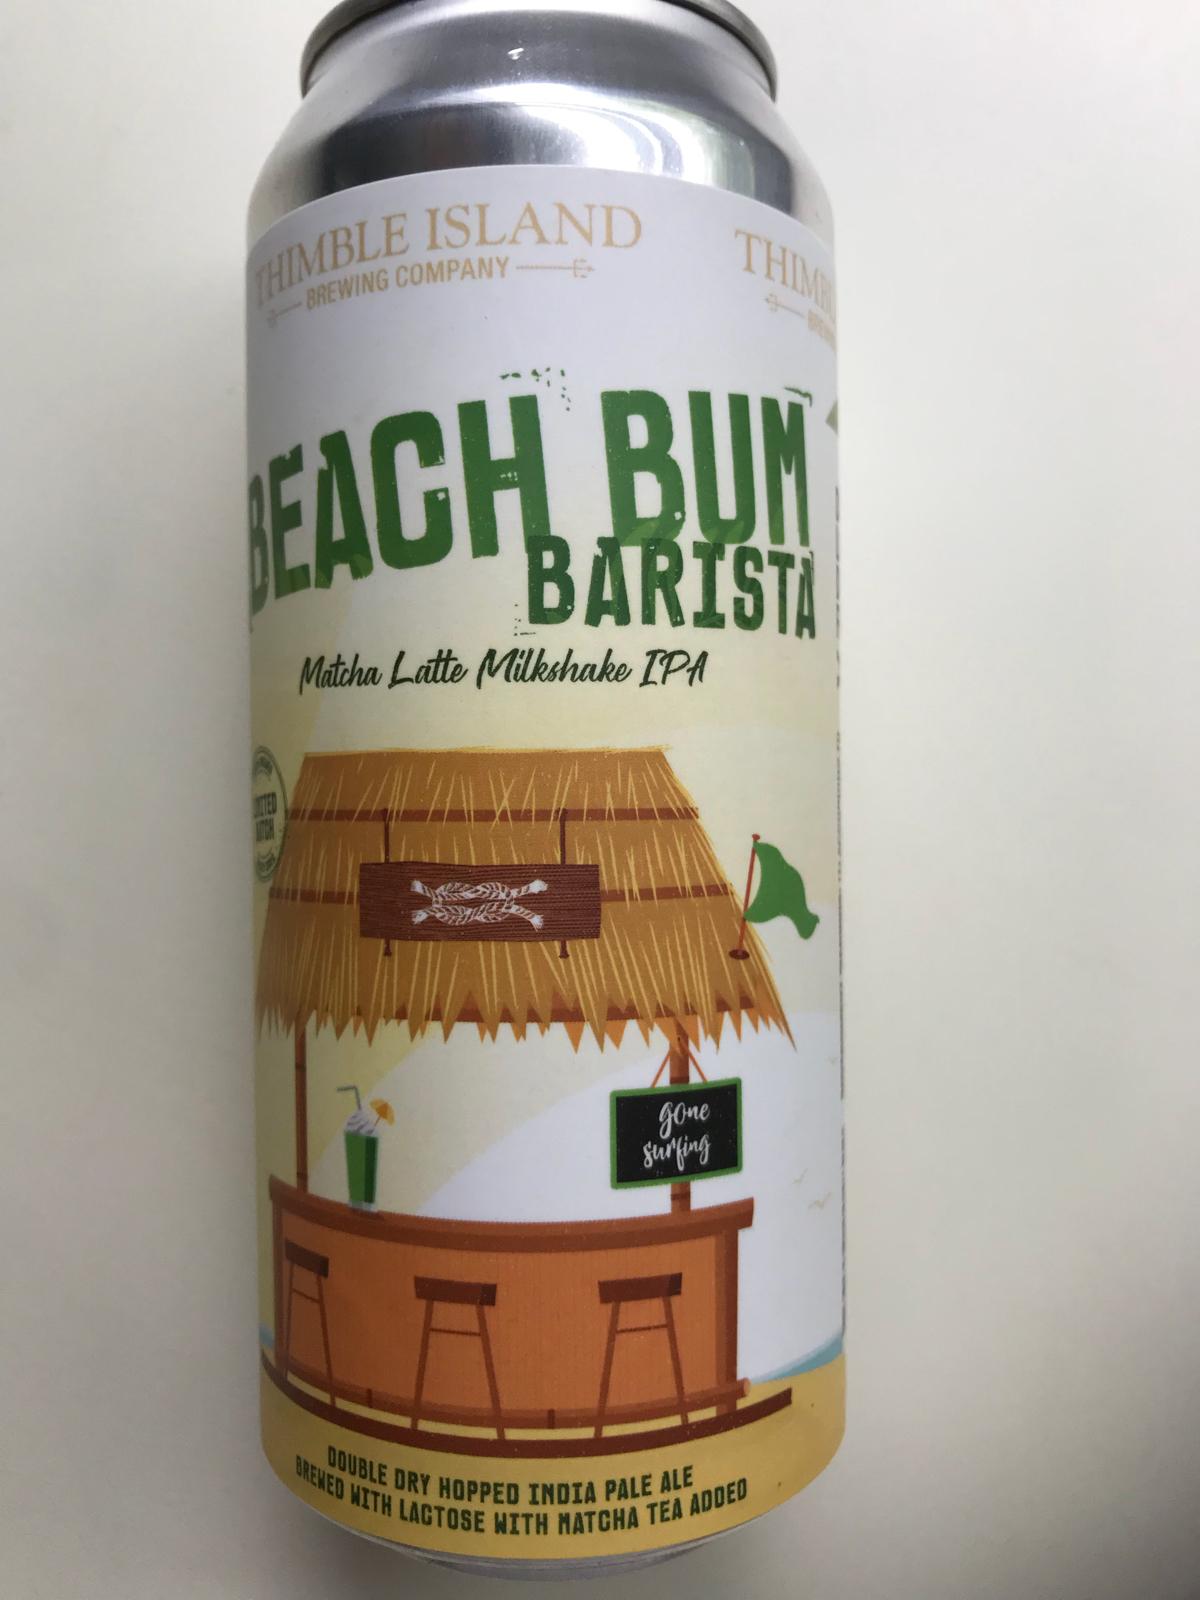 Image result for thimble island beach bum barista label